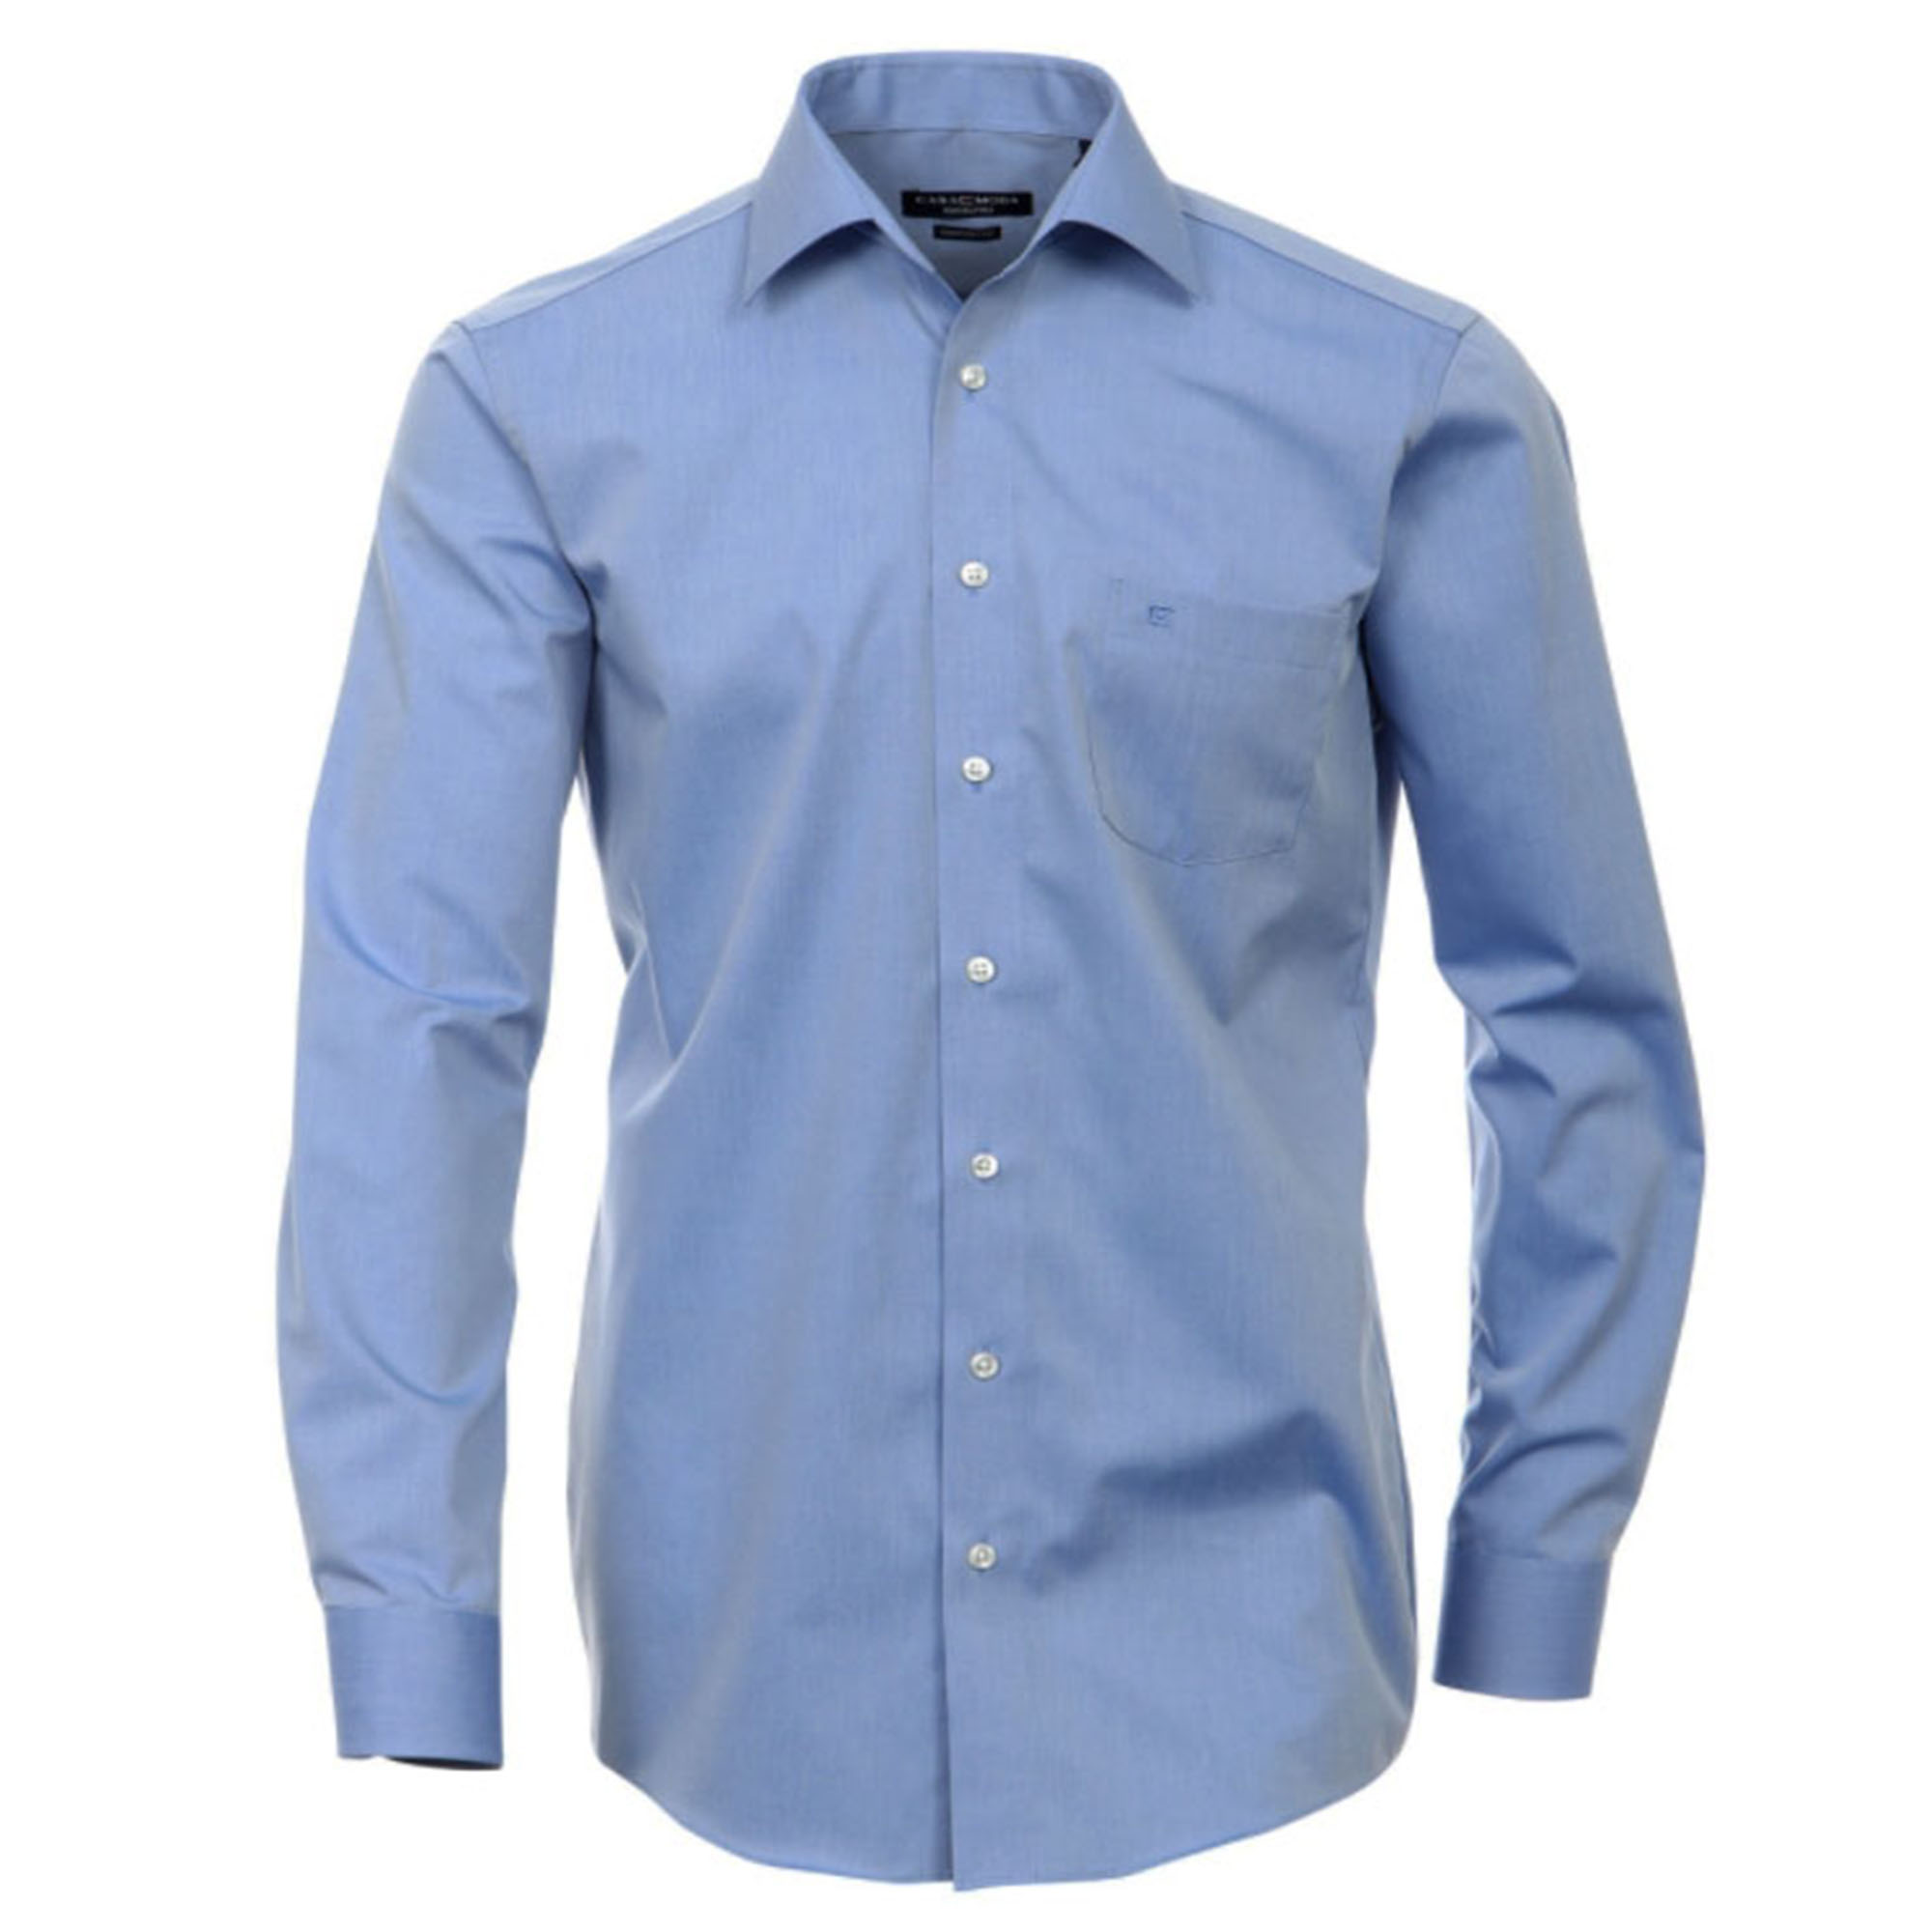 Casa Moda shirt HL28 blue kent collar x-Long 69cm Paul Malone Shop